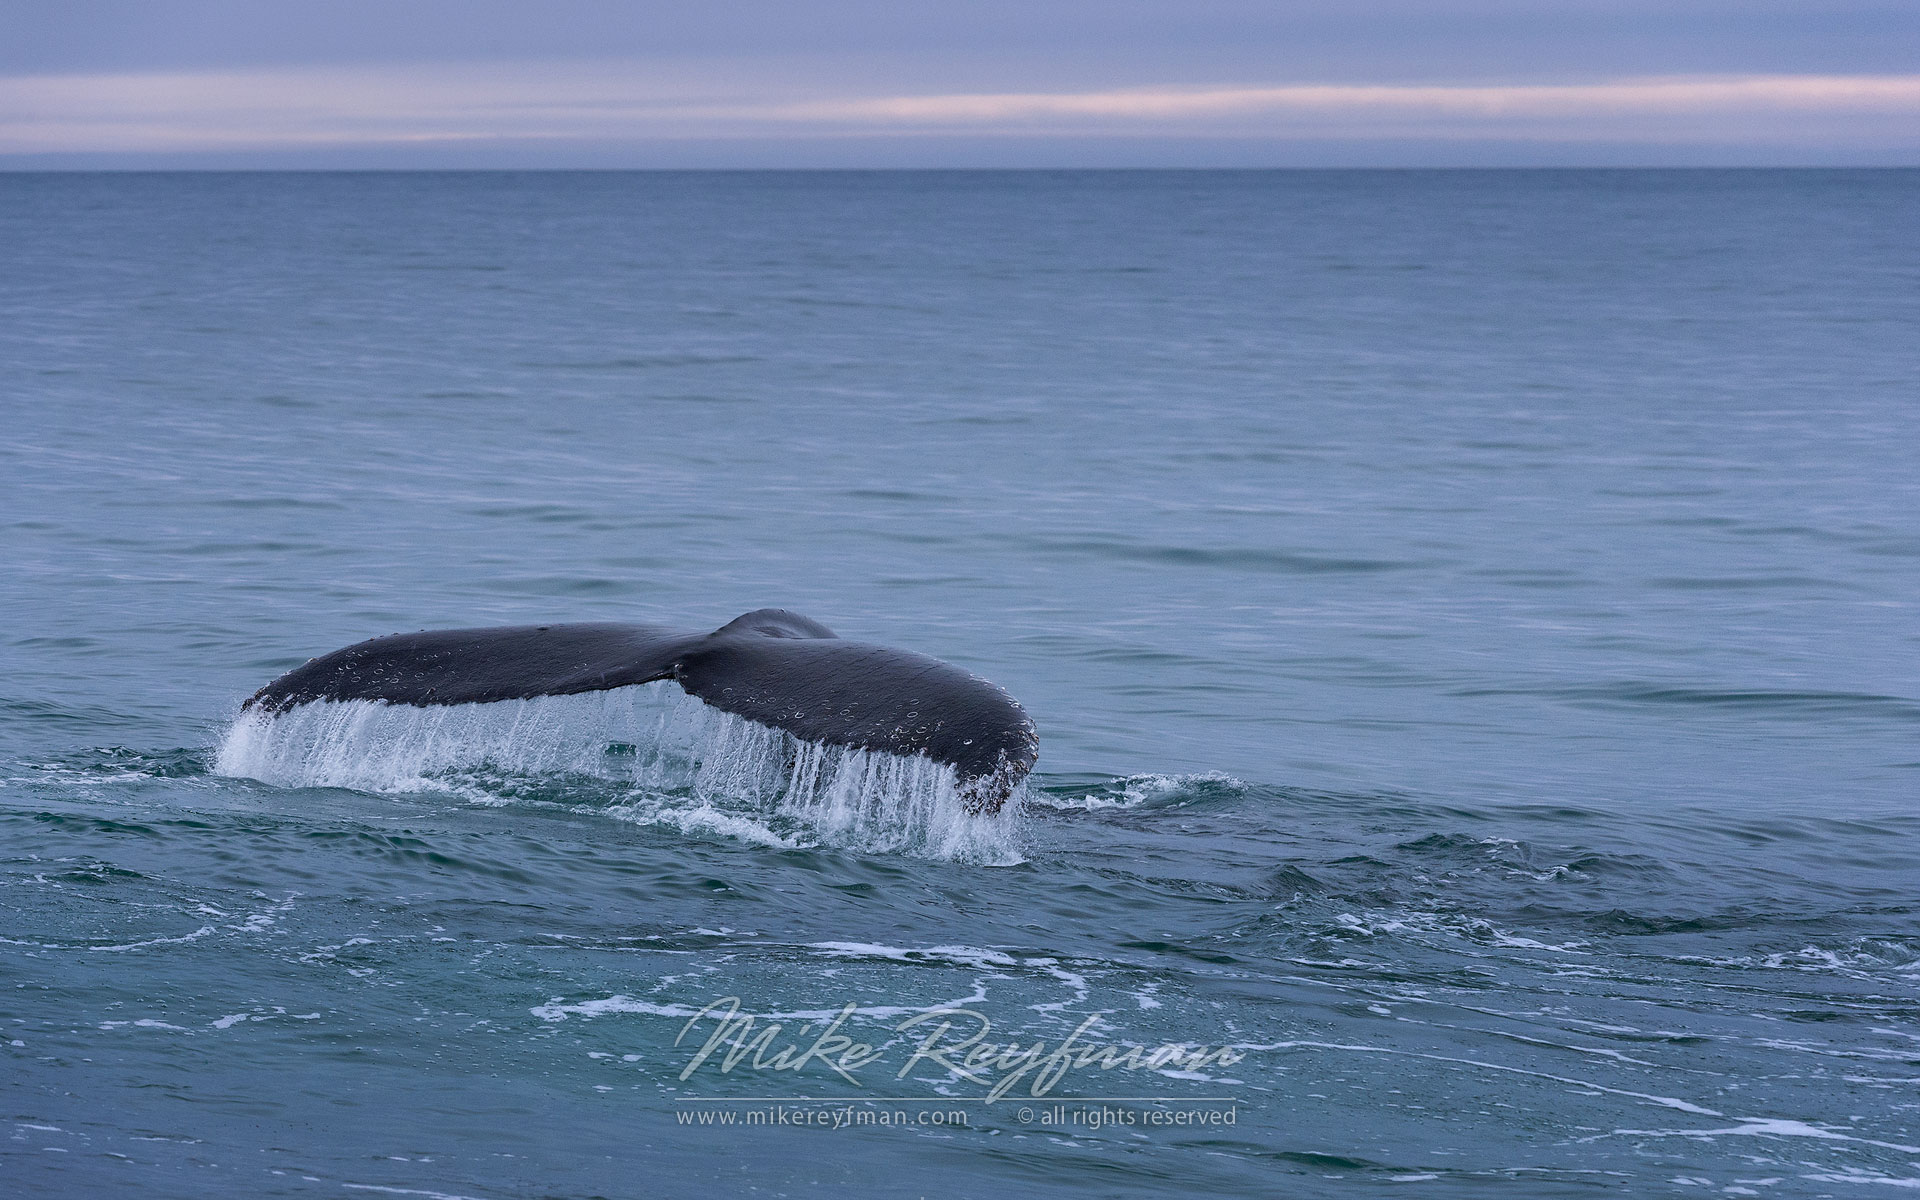 Humback Whale (Megaptera novaeangeliae) near Spitsbergen, Svalbard. - Wildlife-Svalbard-Spitsbergen-Norway - Mike Reyfman Photography